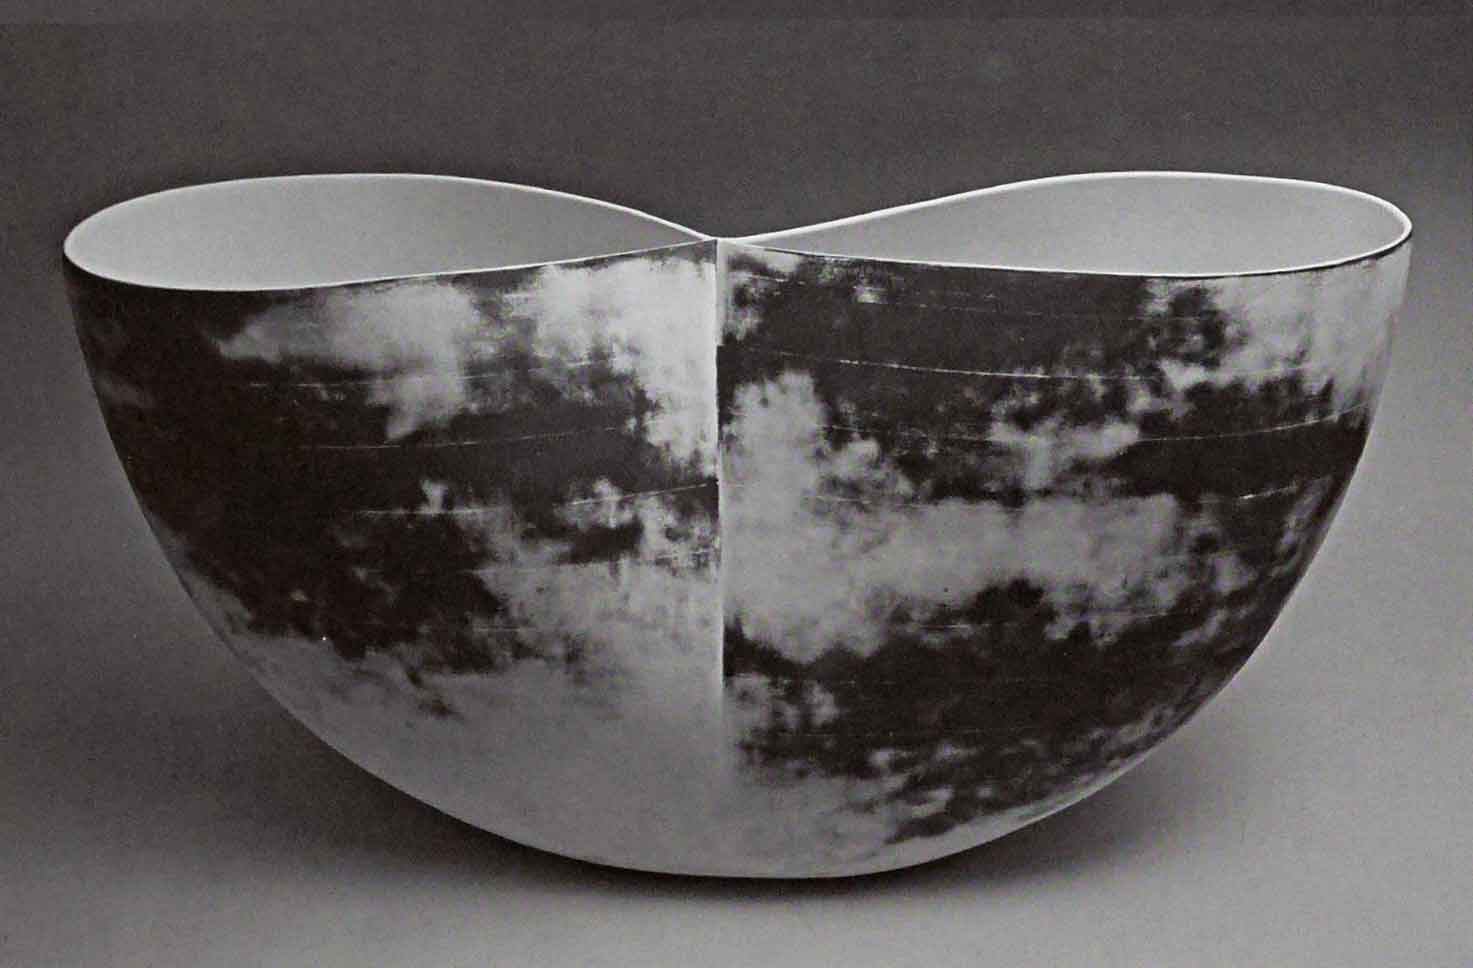 Event Horizon, 2011. Ceramic, 31 x 9 x 17 in. Photo courtesy Lacoste Gallery.